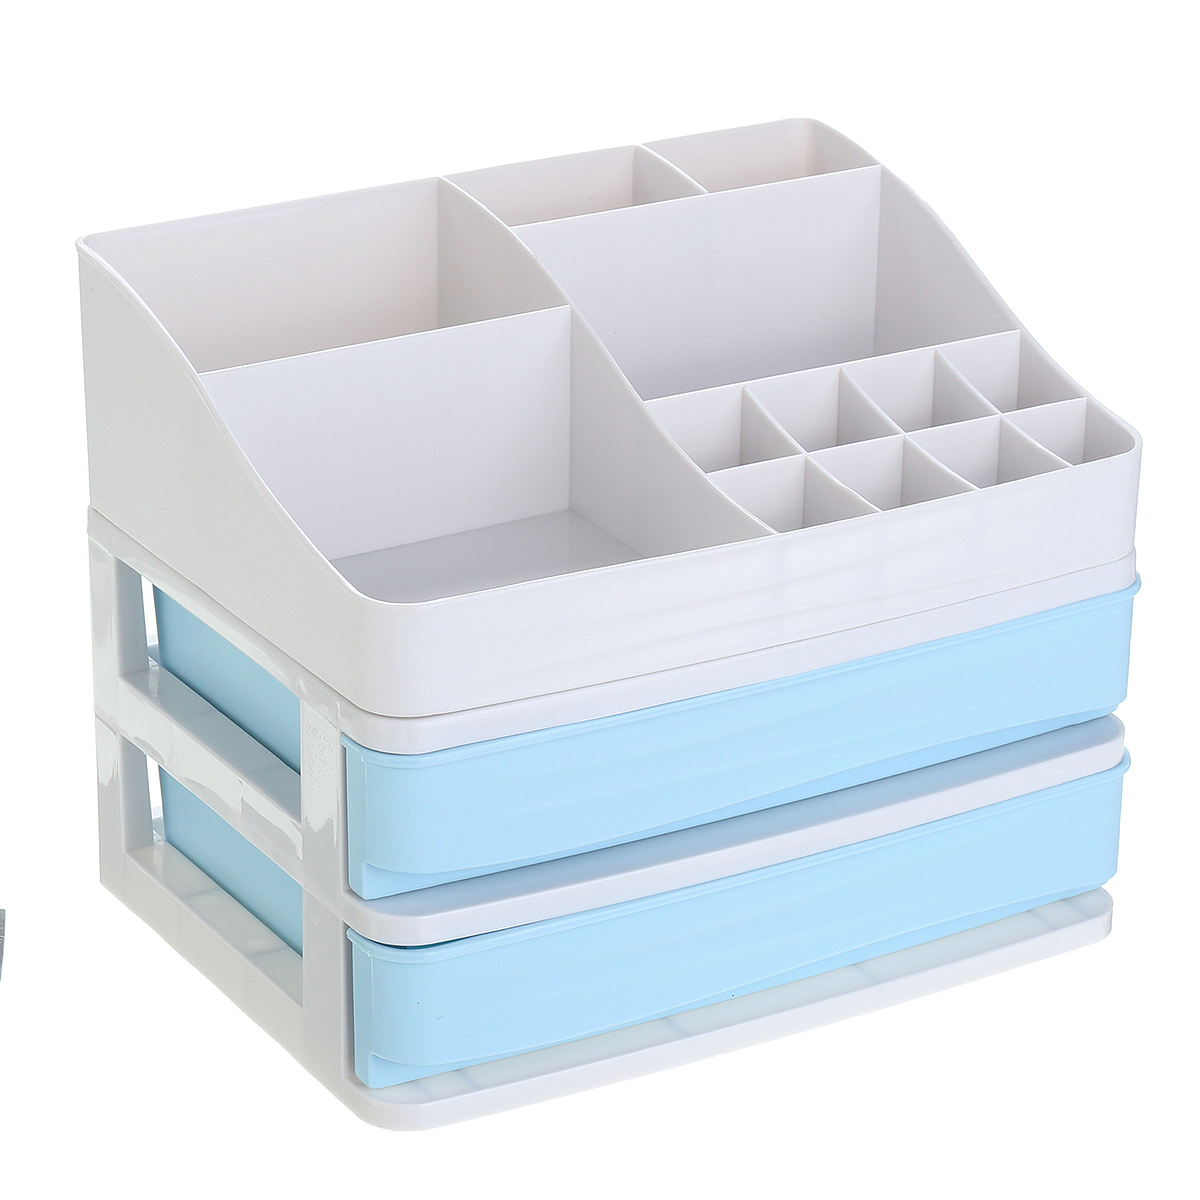 Plastic Cosmetic Box Drawer Makeup Organizer Makeup Desktop Storage Box Container Nail Casket Holder Jewelry Organizer Desktop Organizer—2